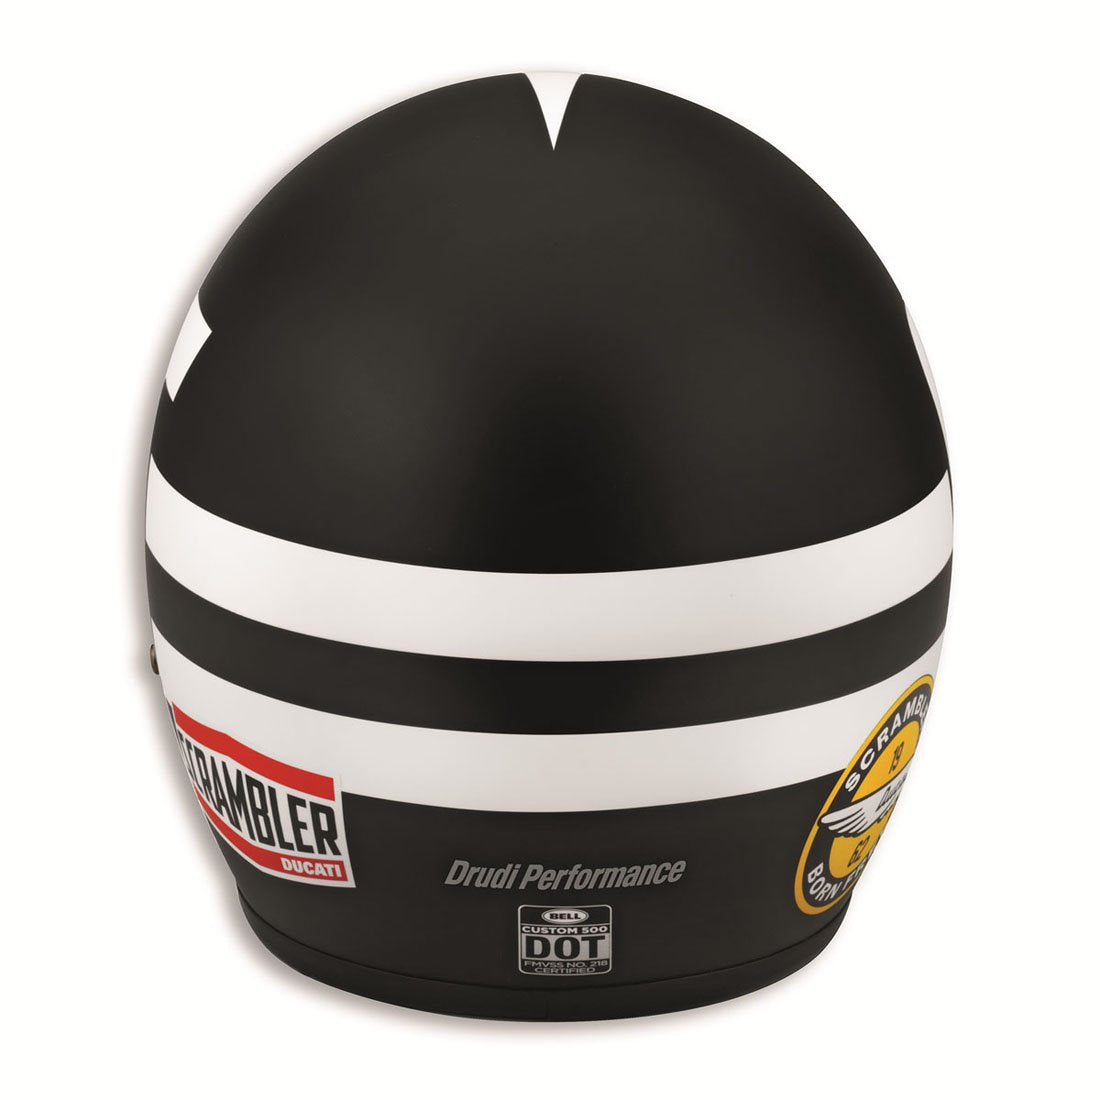 Ducati Scrambler Short Track Helmet - Black/White 98103082